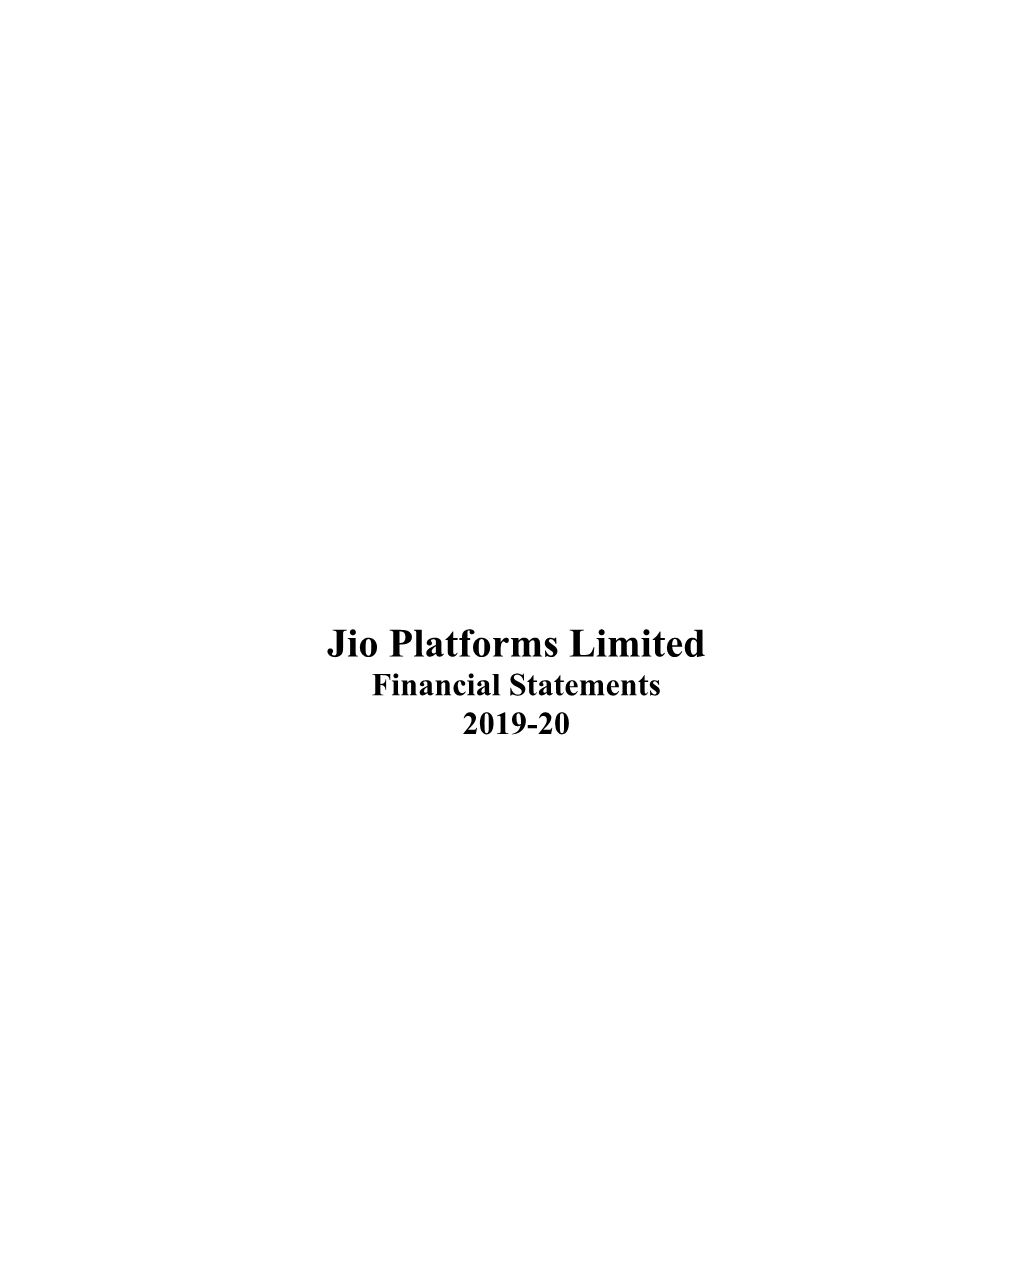 Jio Platforms Limited Financial Statements 2019-20 2 Jio Platforms Limited